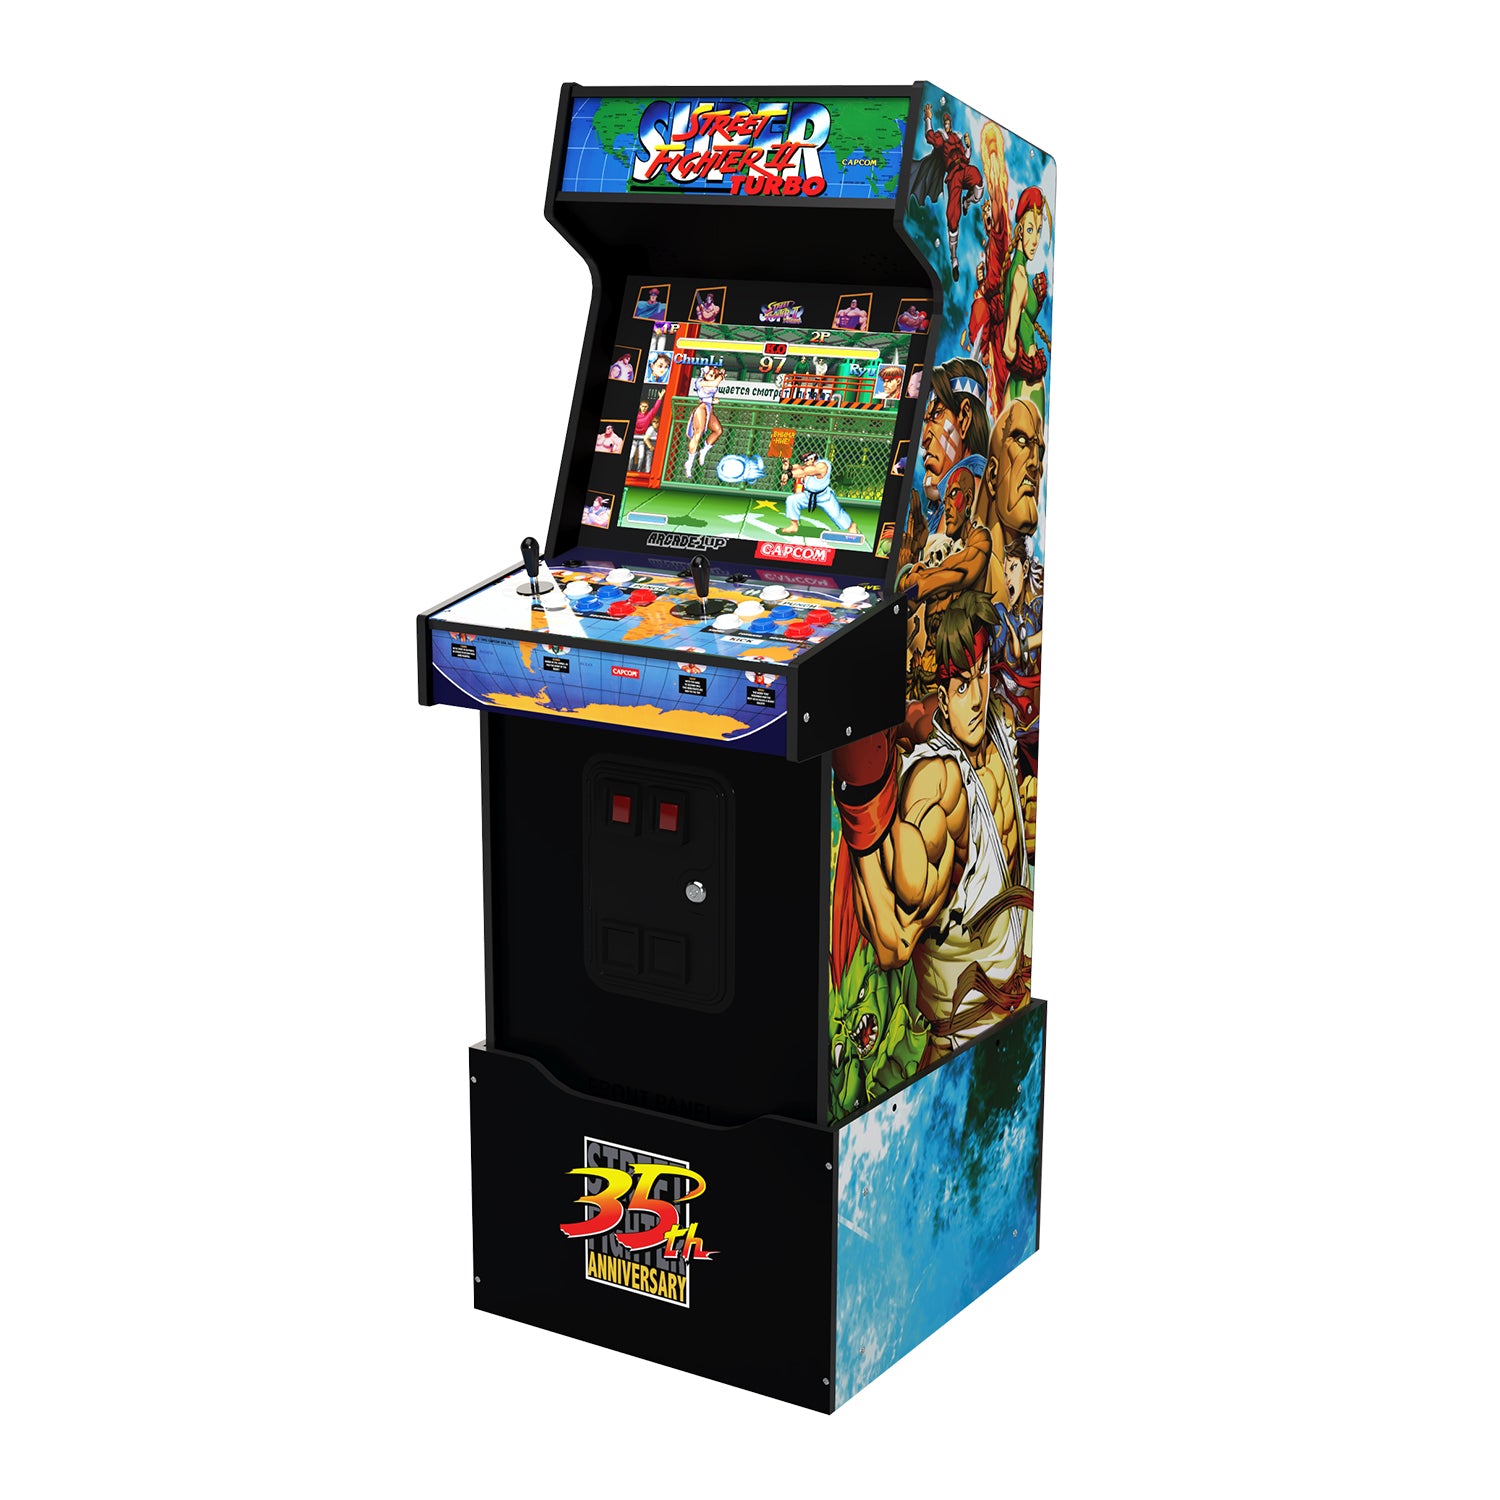 Capcom Legacy 35th Anniversary Arcade Game14-n-1 Shinku Hadoken Edition, Arcade1Up - image 2 of 8